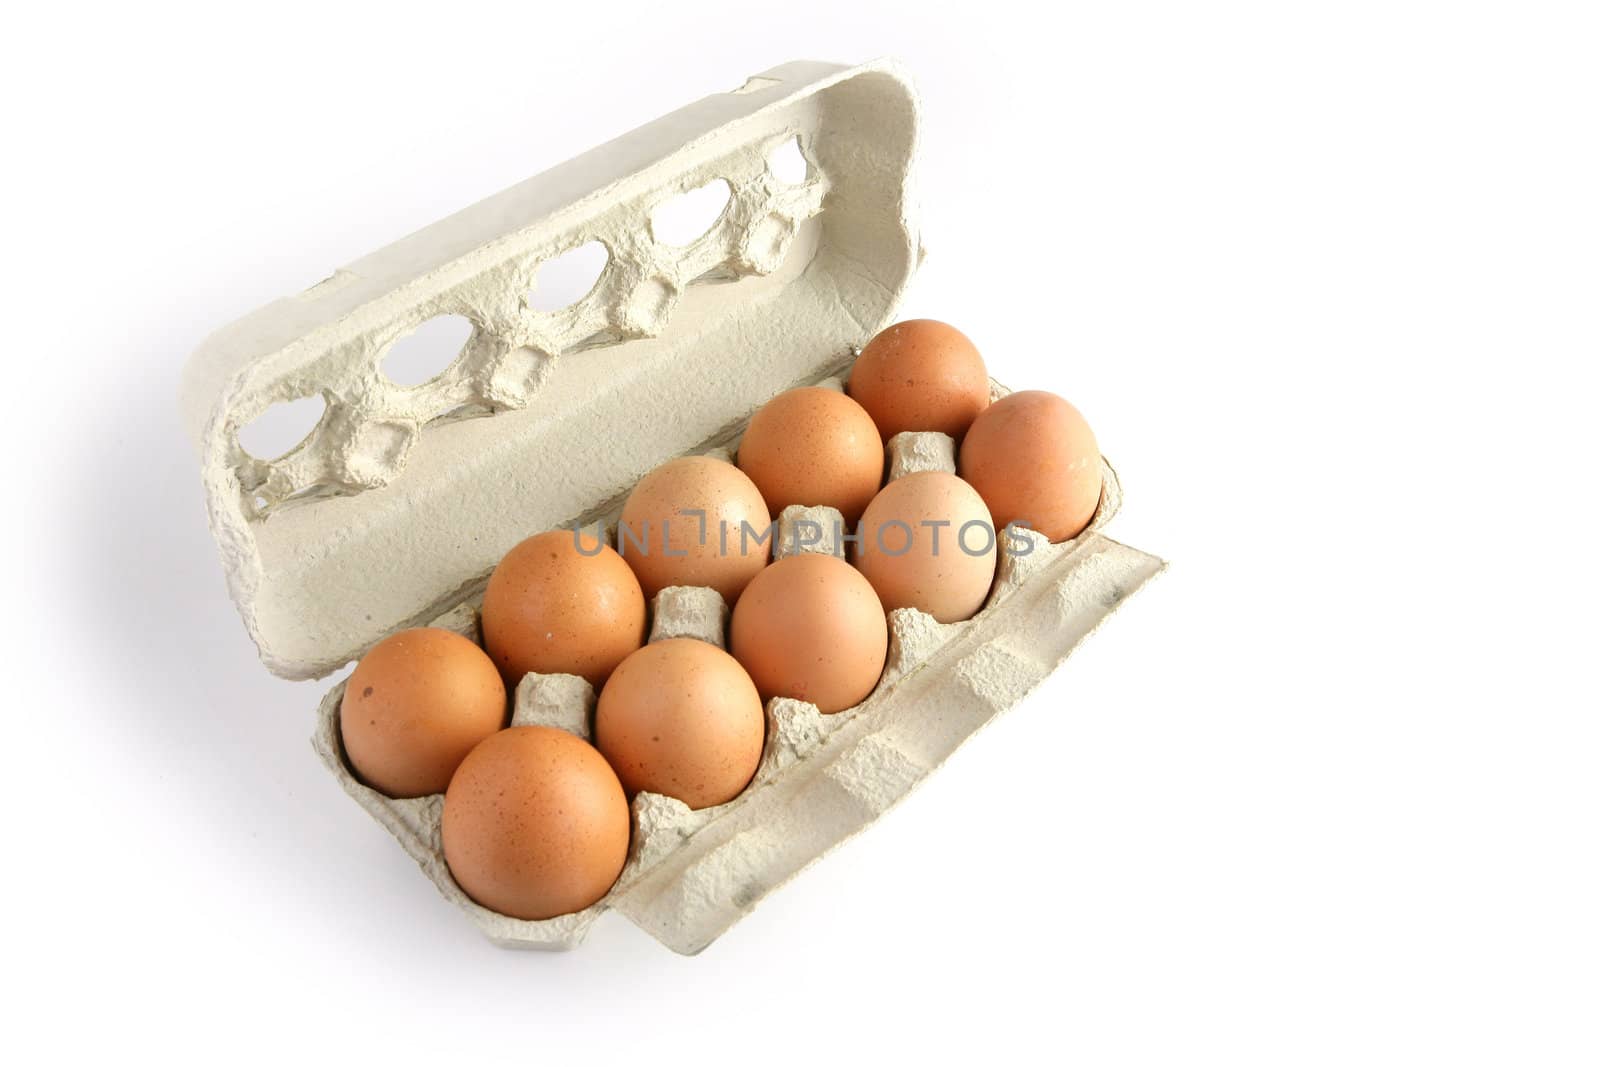 Carton of eggs by phovoir